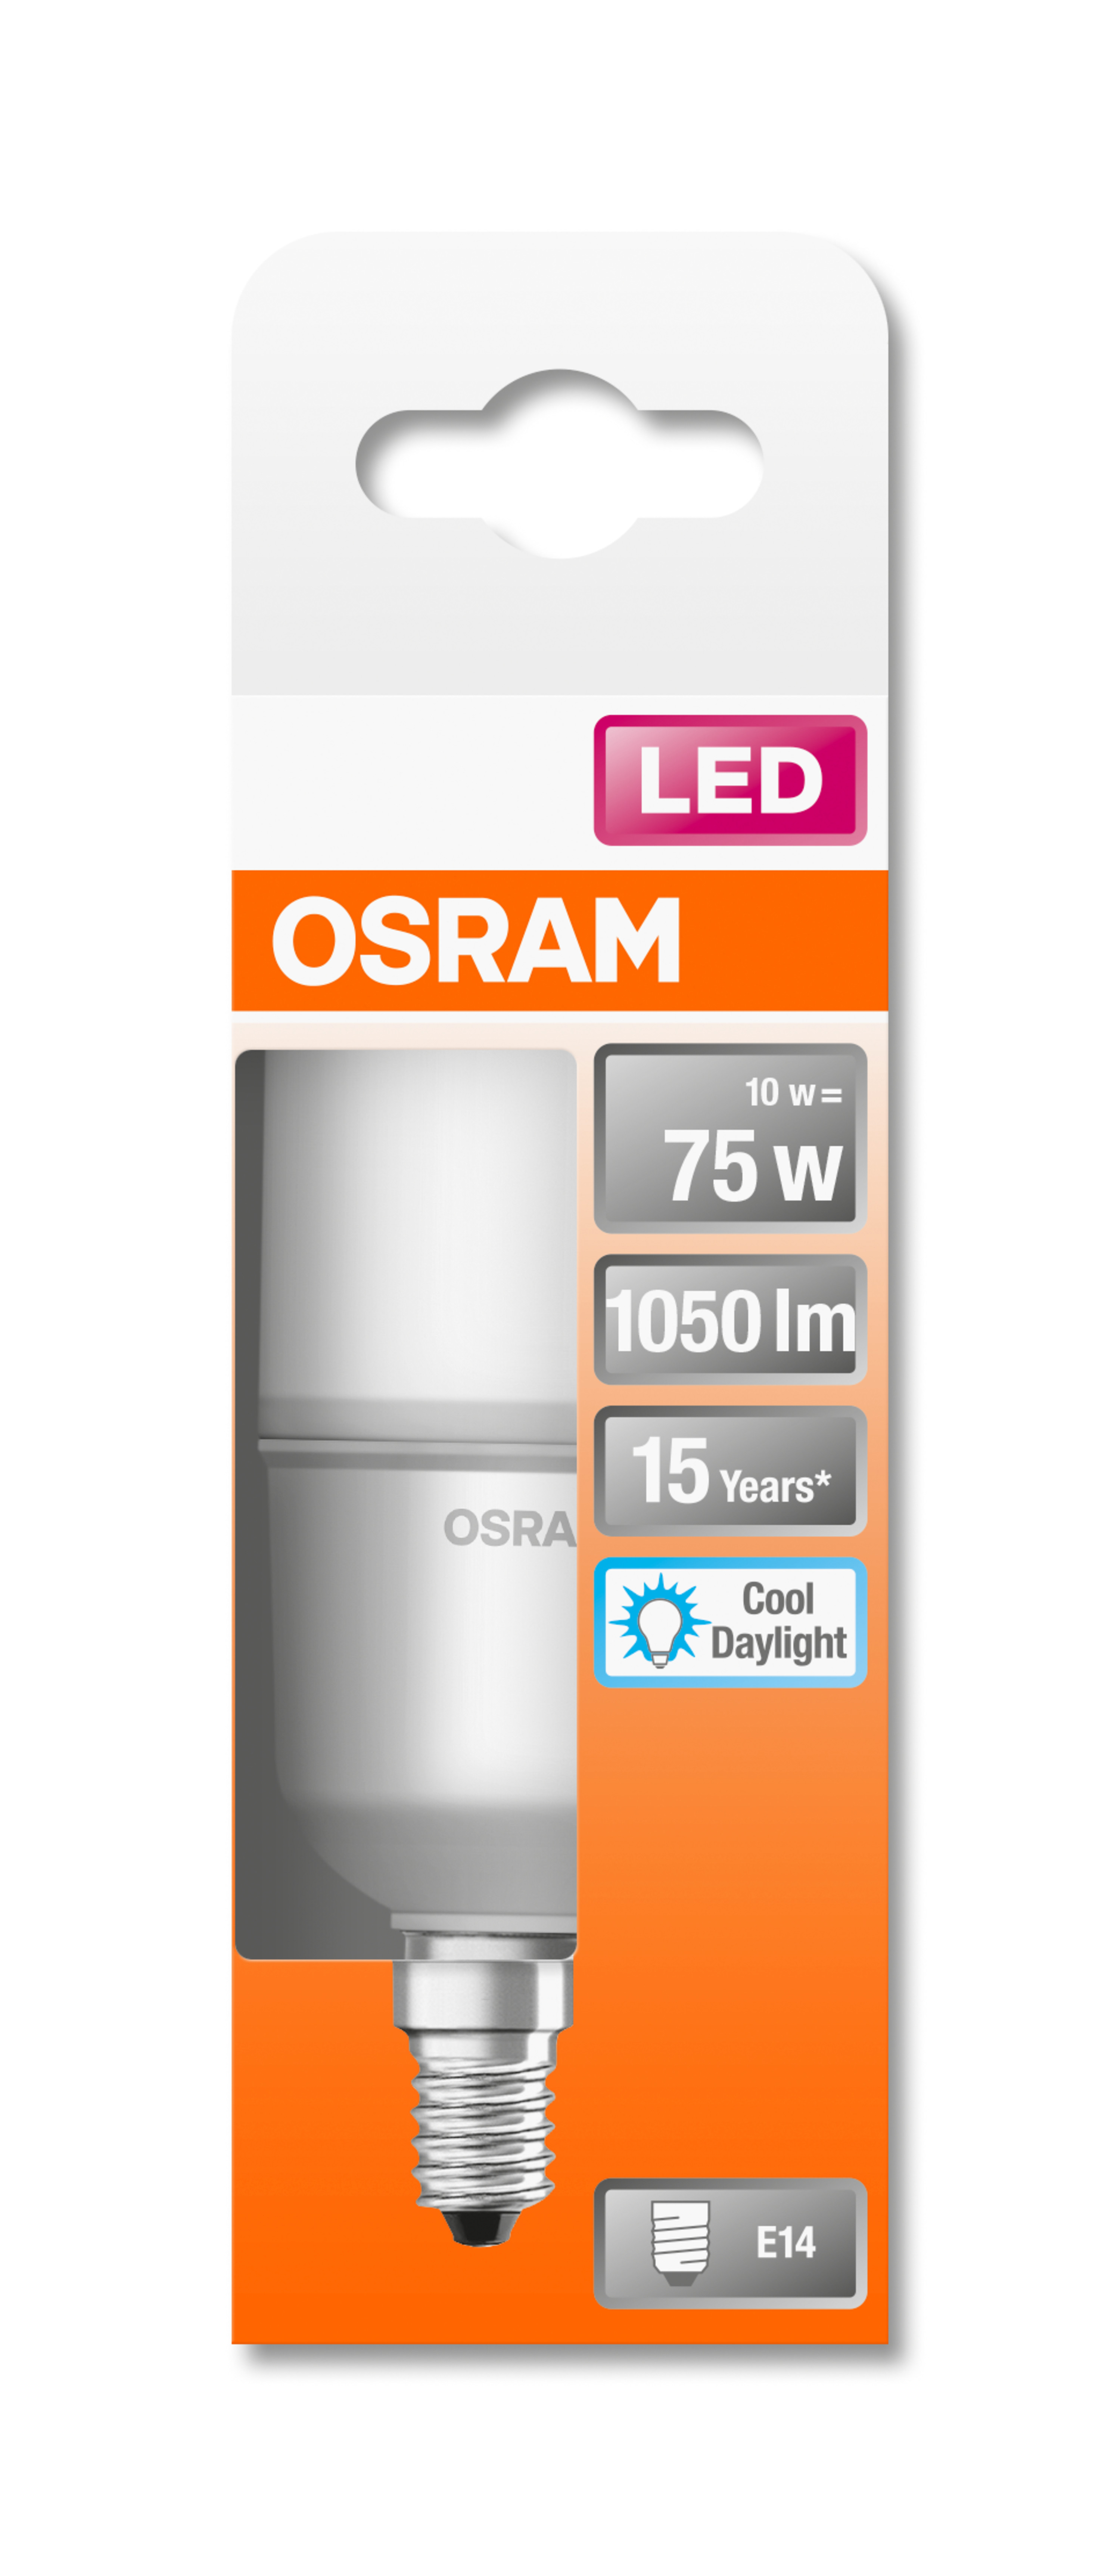 LED STAR STICK Lampe OSRAM  lumen 1050 LED Kaltweiß